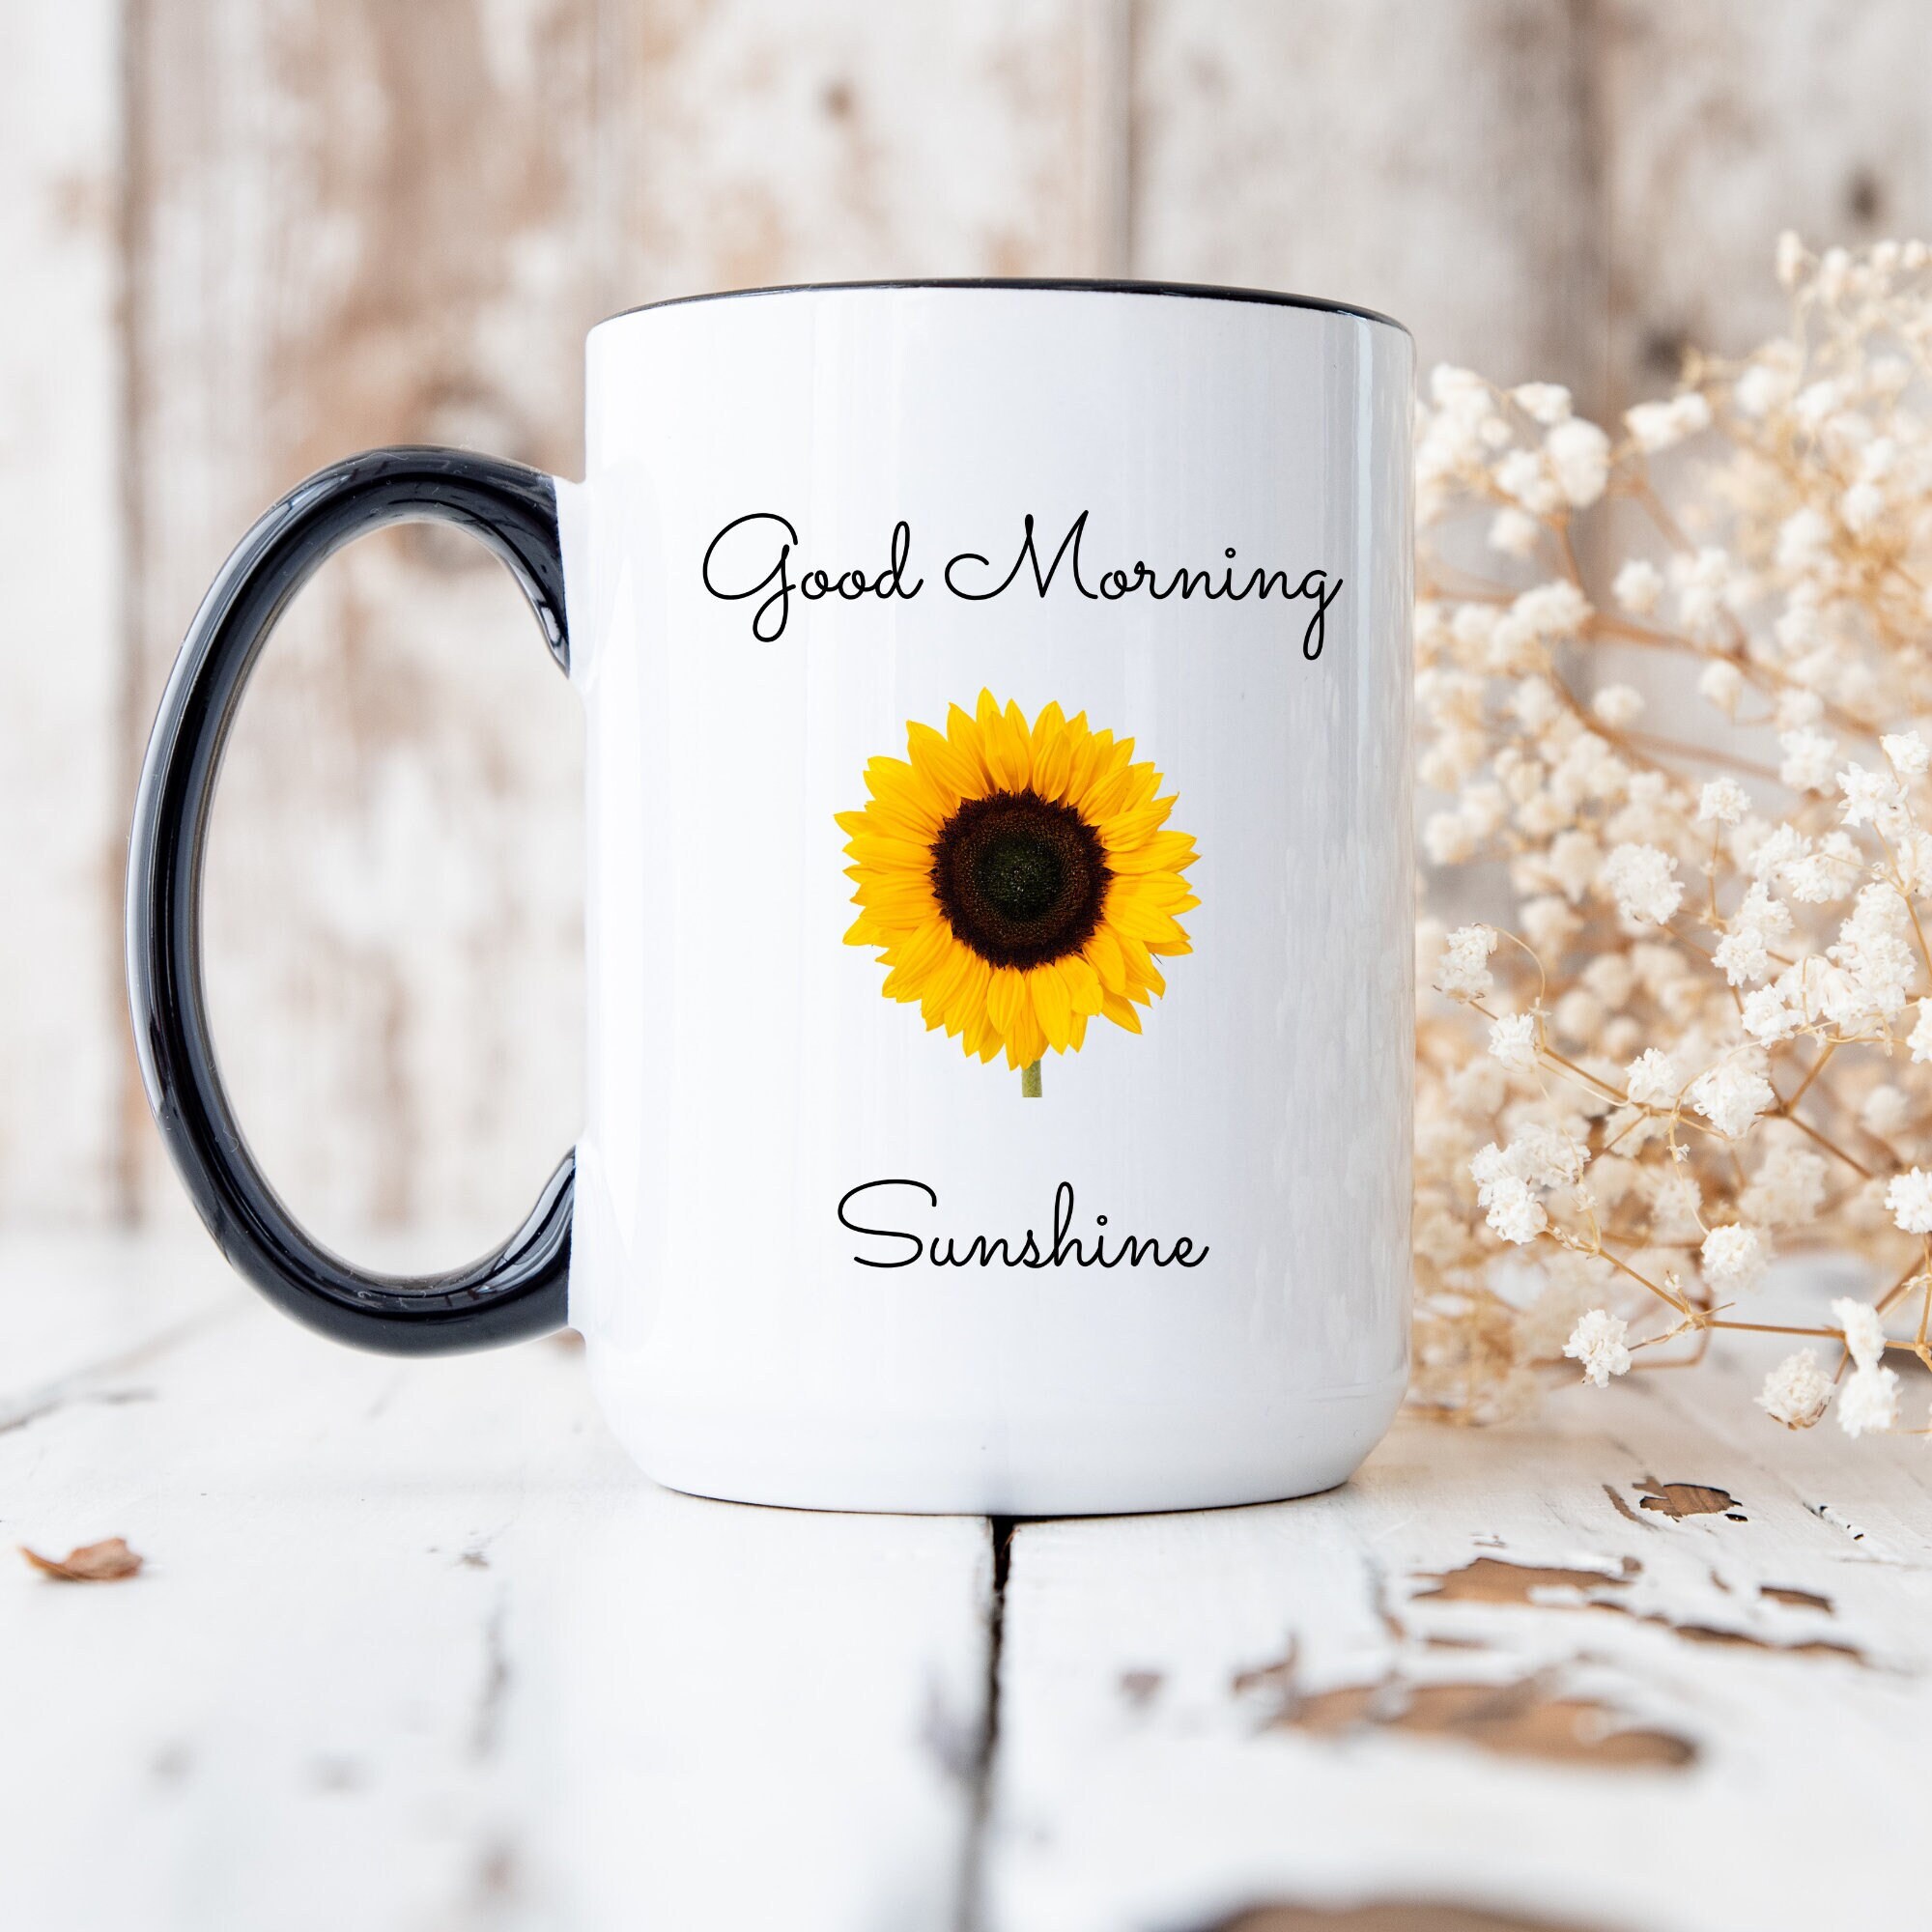 Good Morning Sunshine Coffee Cup Good Morning Sunshine 